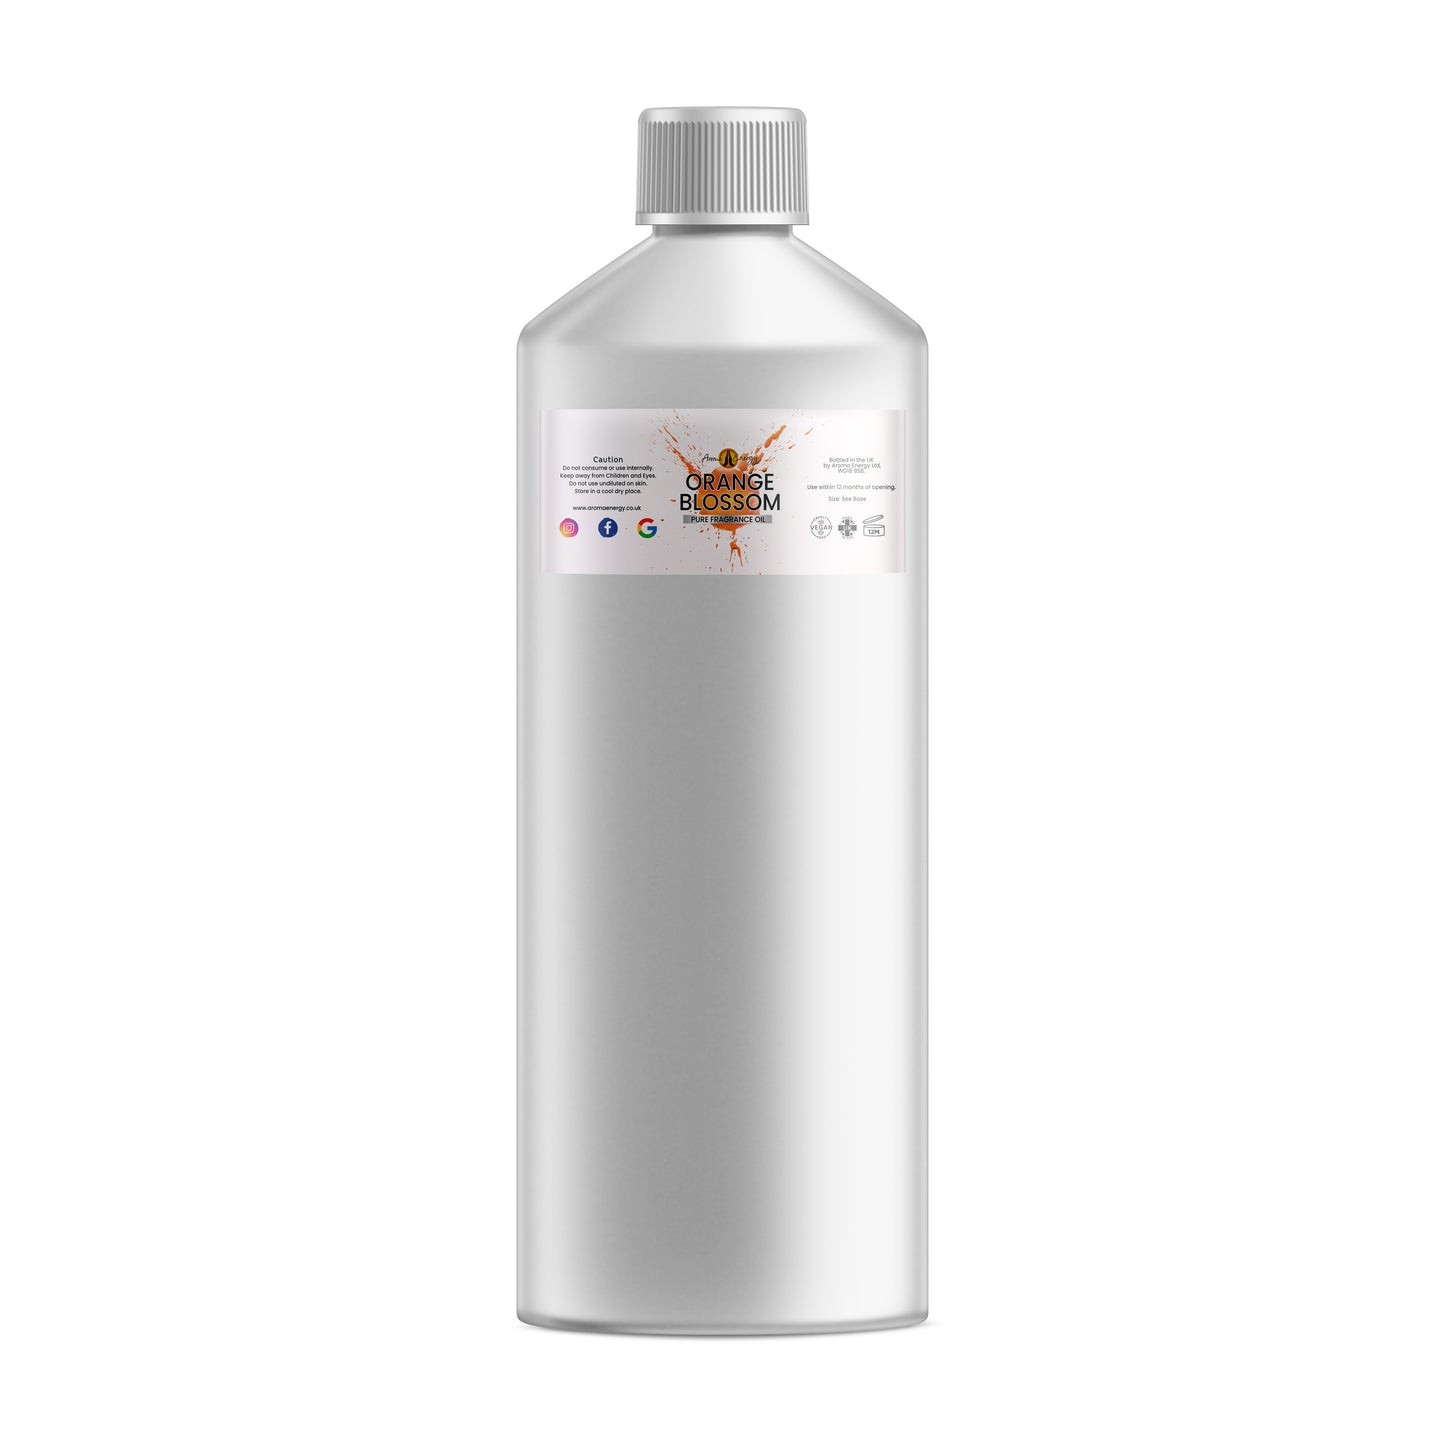 Orange Blossom Fragrance Oil - Wholesale - Aroma Energy